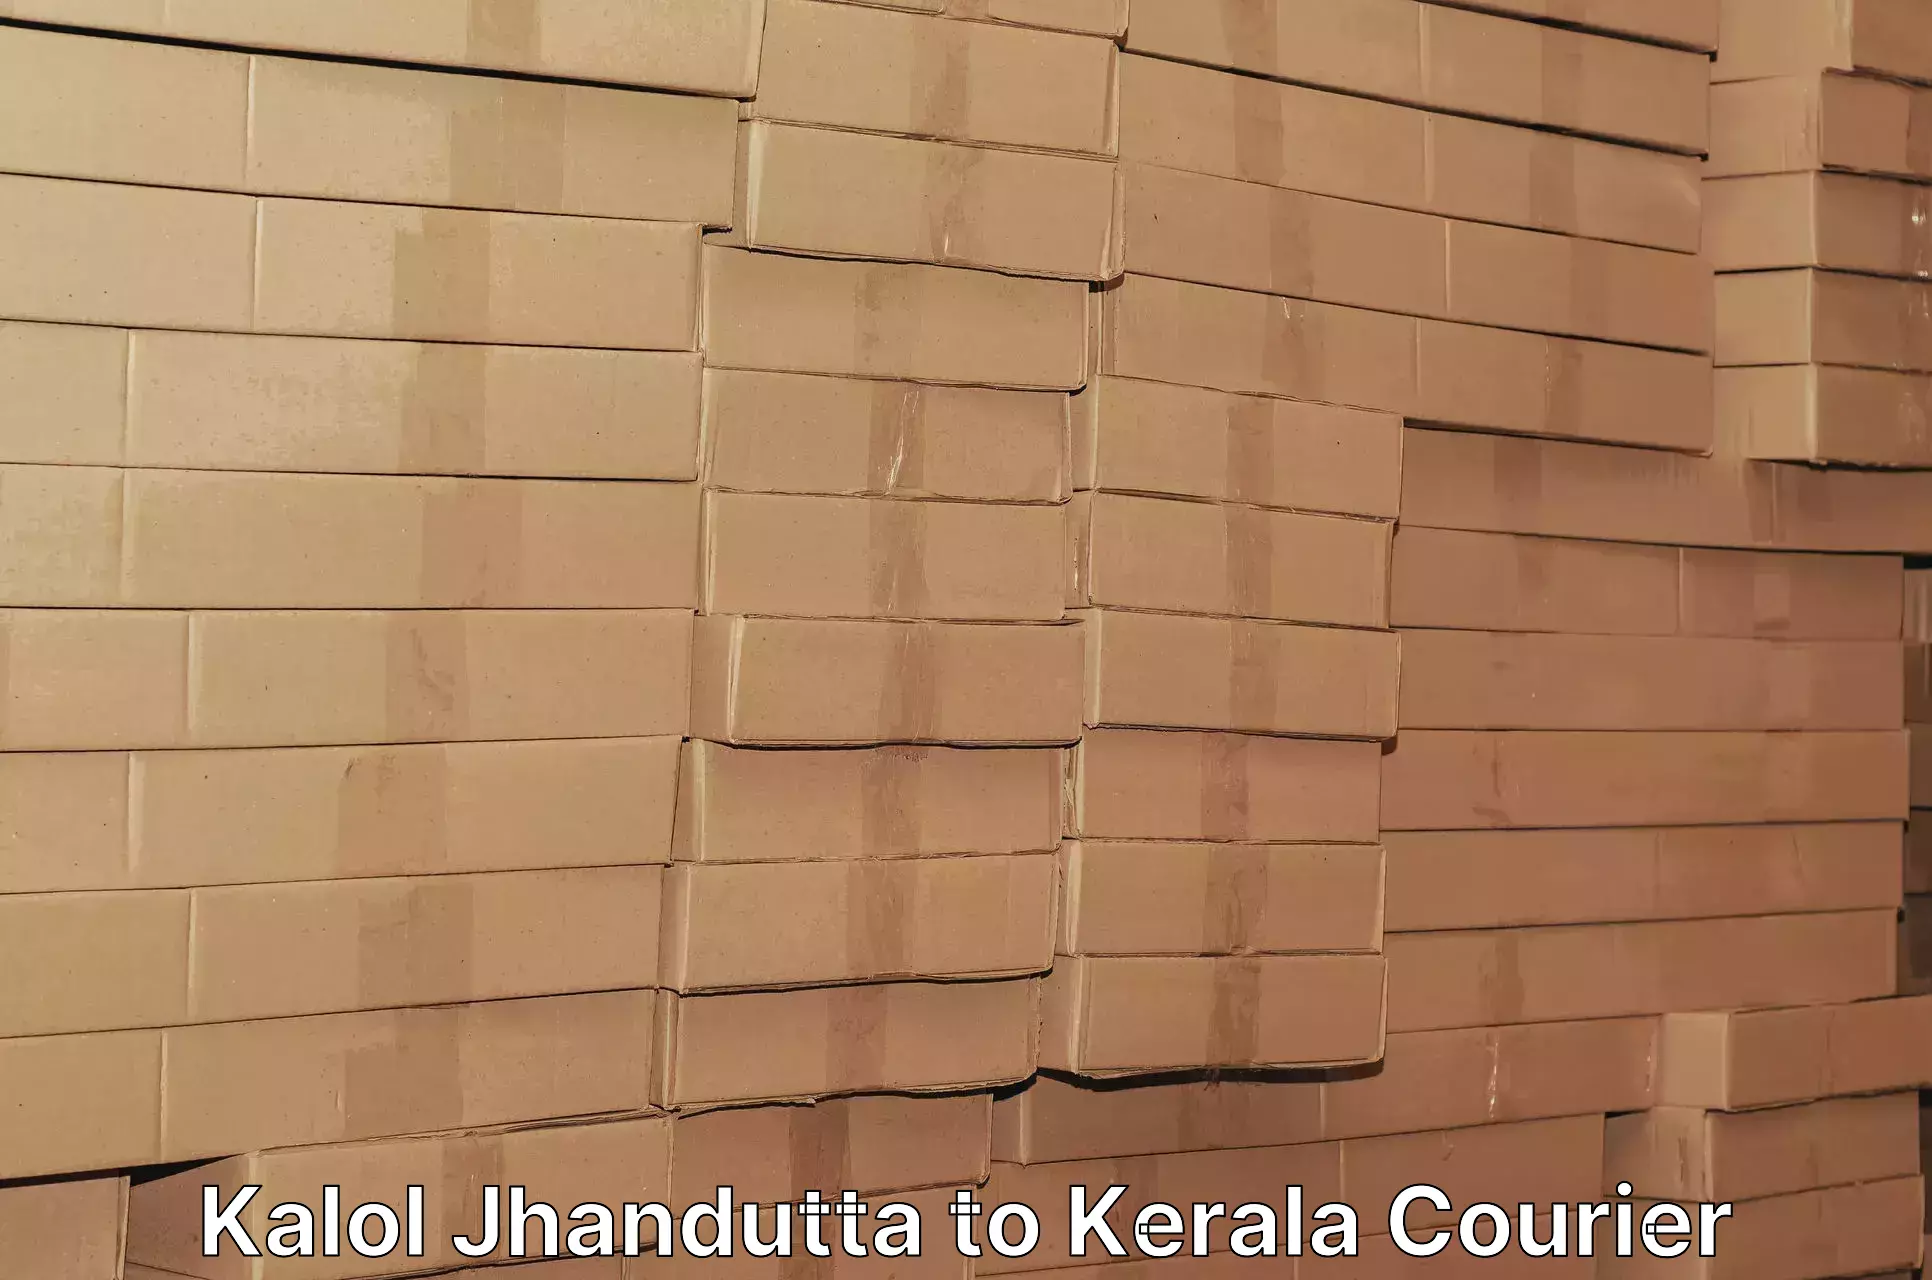 Nationwide delivery network Kalol Jhandutta to Kerala